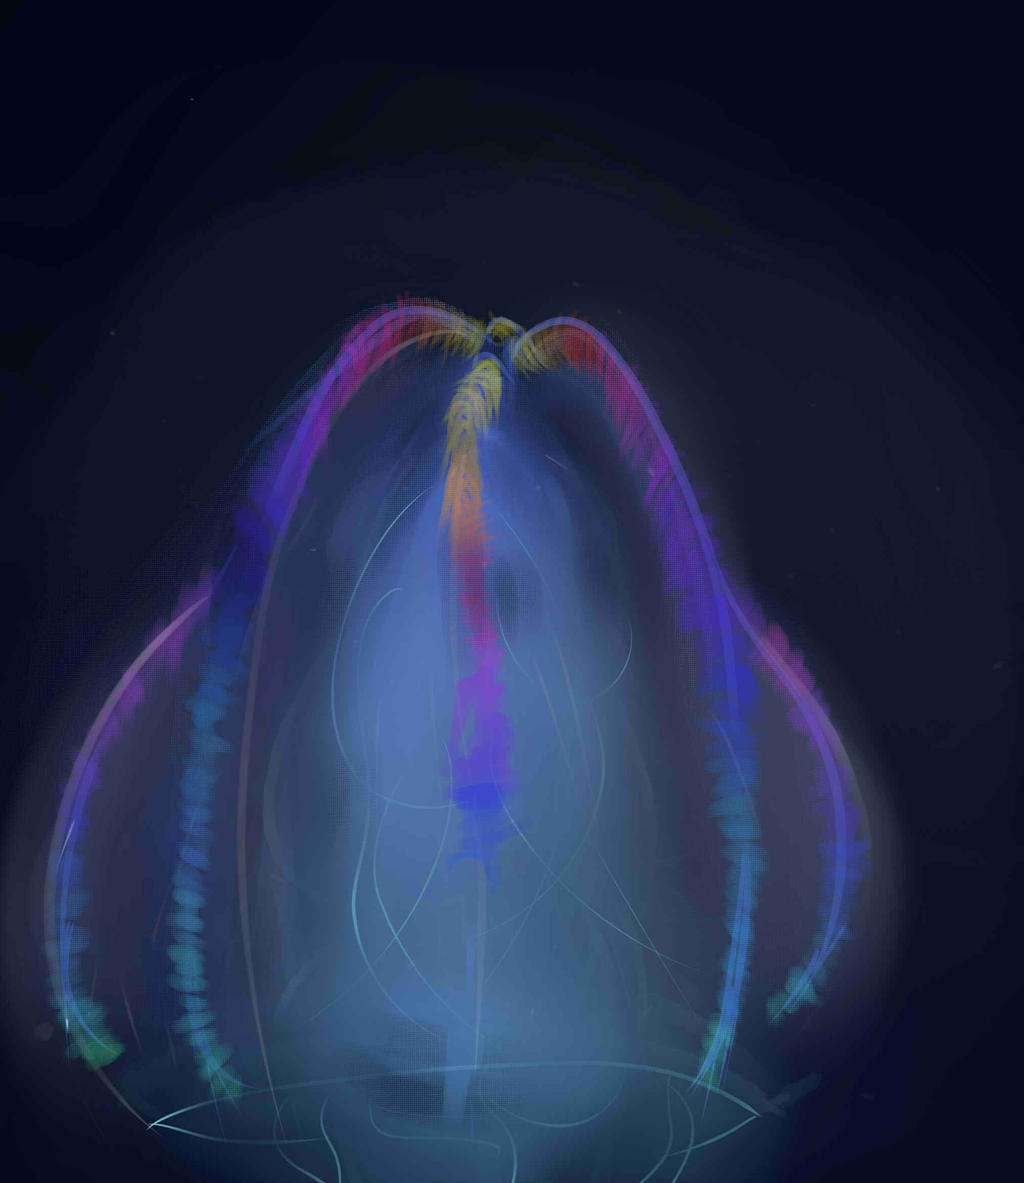 The Comb Jellyfish by MarshallLee-vampire on DeviantArt